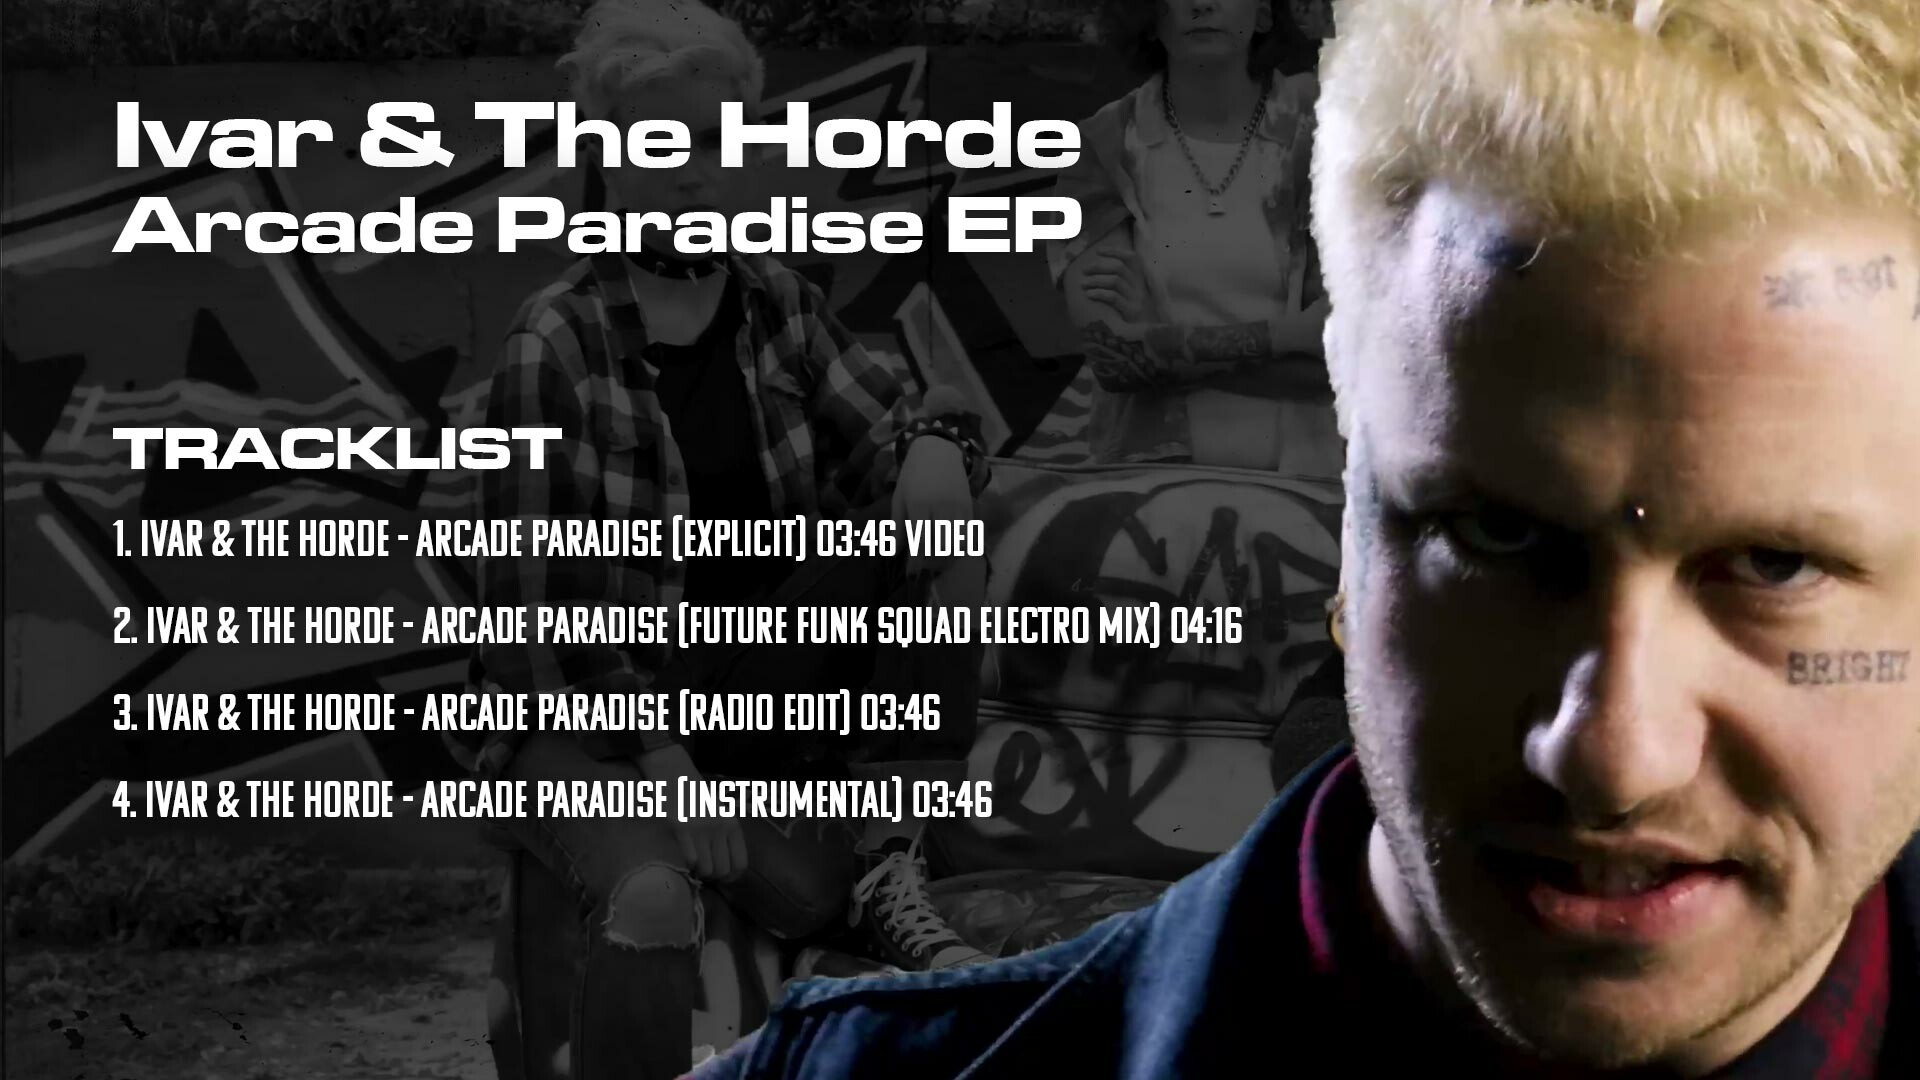 [$ 0.5] Arcade Paradise - Arcade Paradise EP DLC Steam CD Key